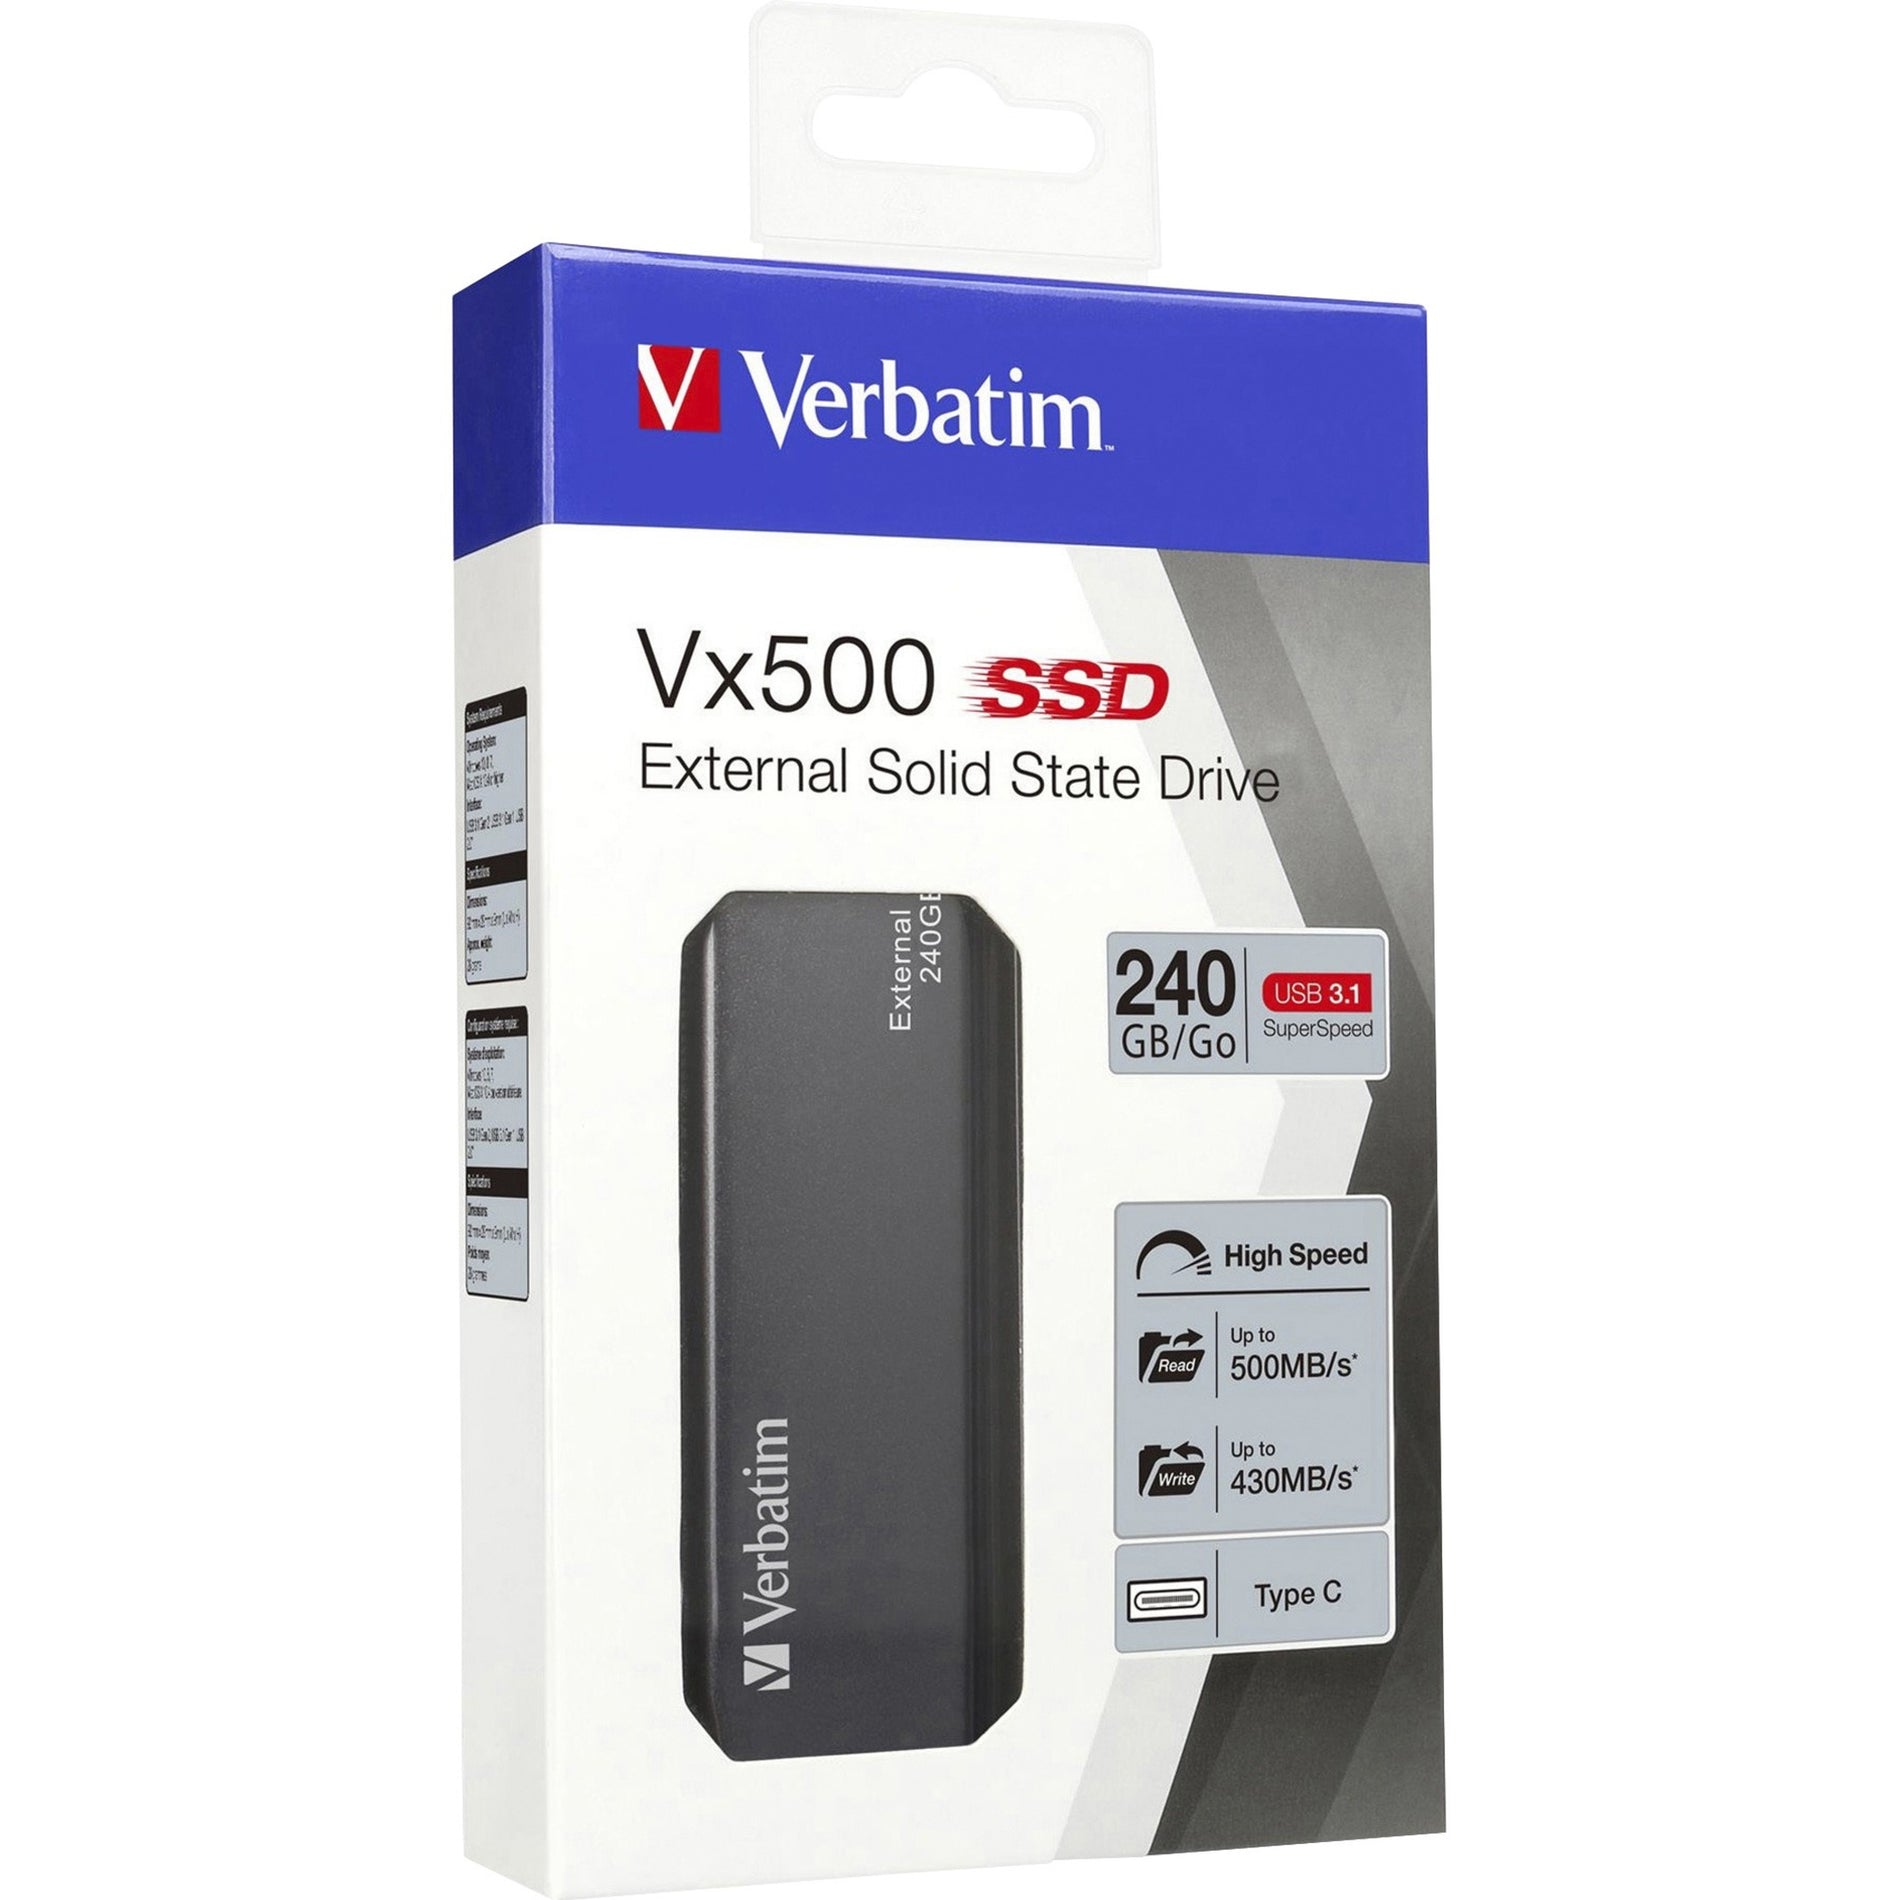 Verbatim 47442 240GB Vx500 External SSD, USB 3.1 Gen 2 - Graphite, Fast Data Transfer, Portable Storage